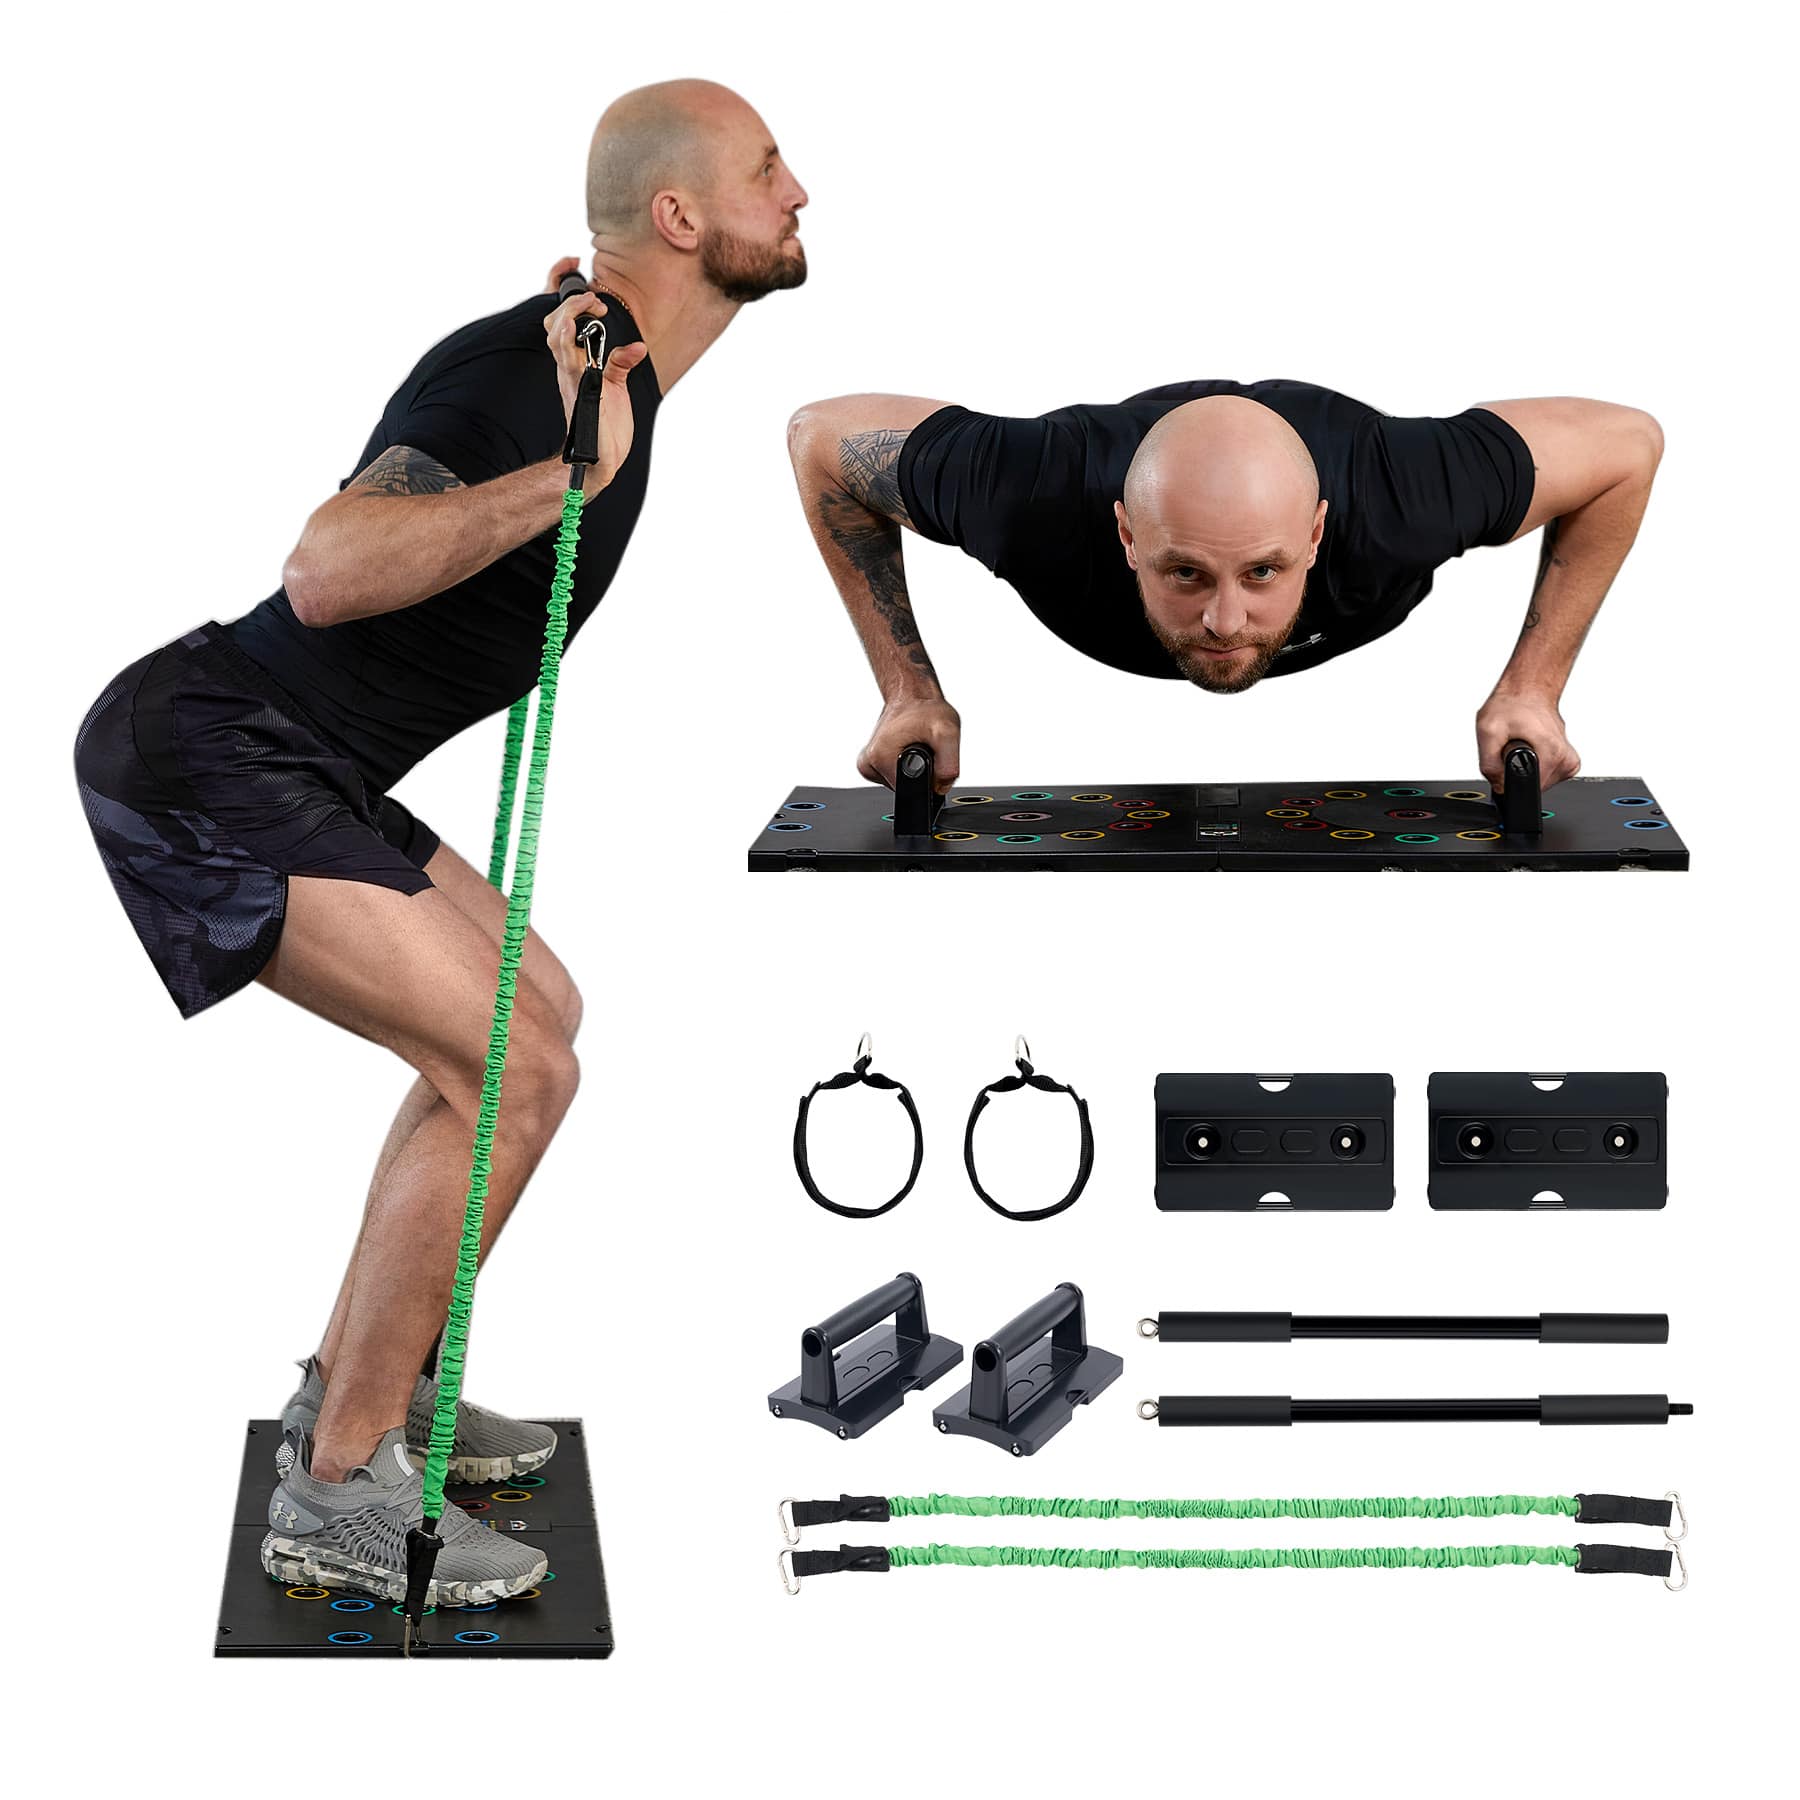  BODY RHYTHM Portable Home Gym Workout Equipment